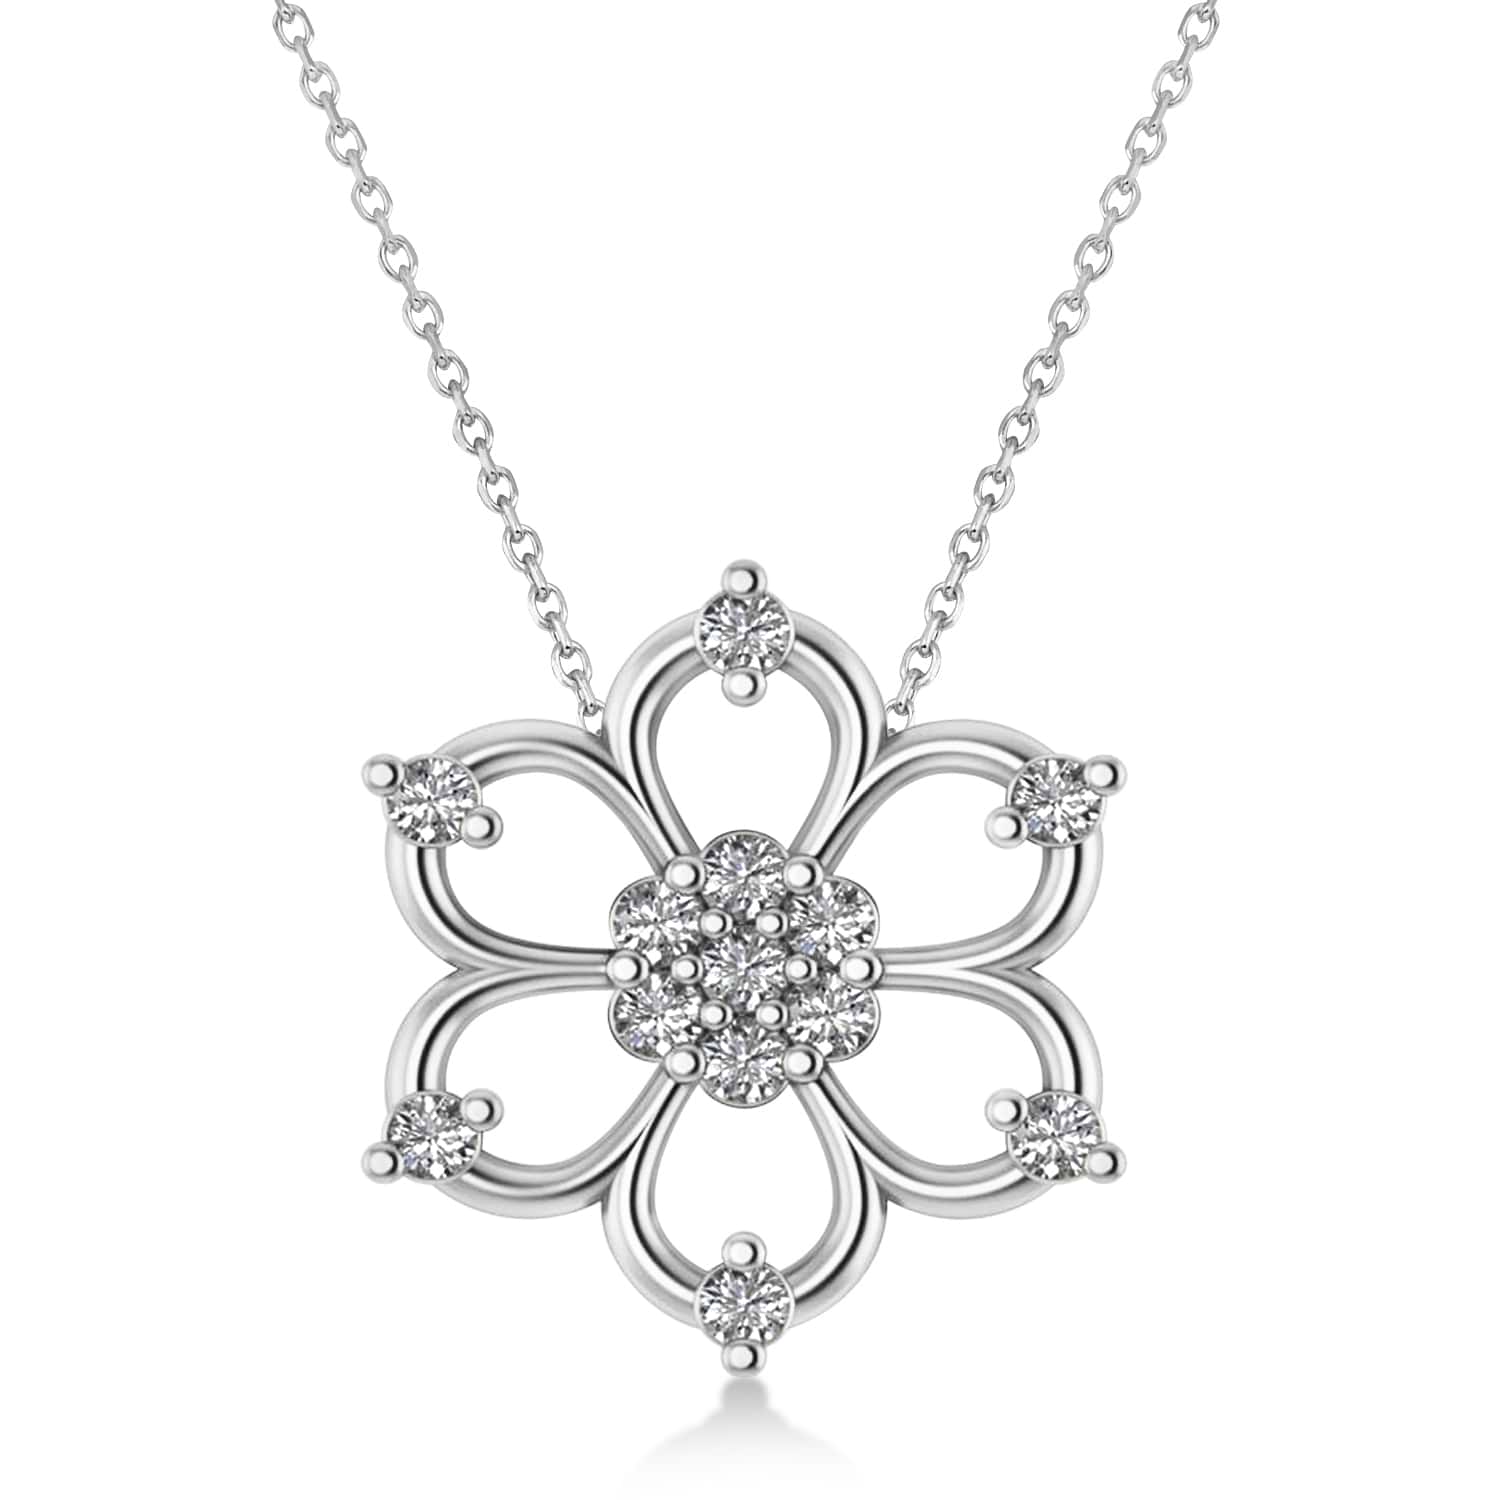 Diamond Six-Petal Flower Pendant Necklace 14k White Gold (0.26ct)